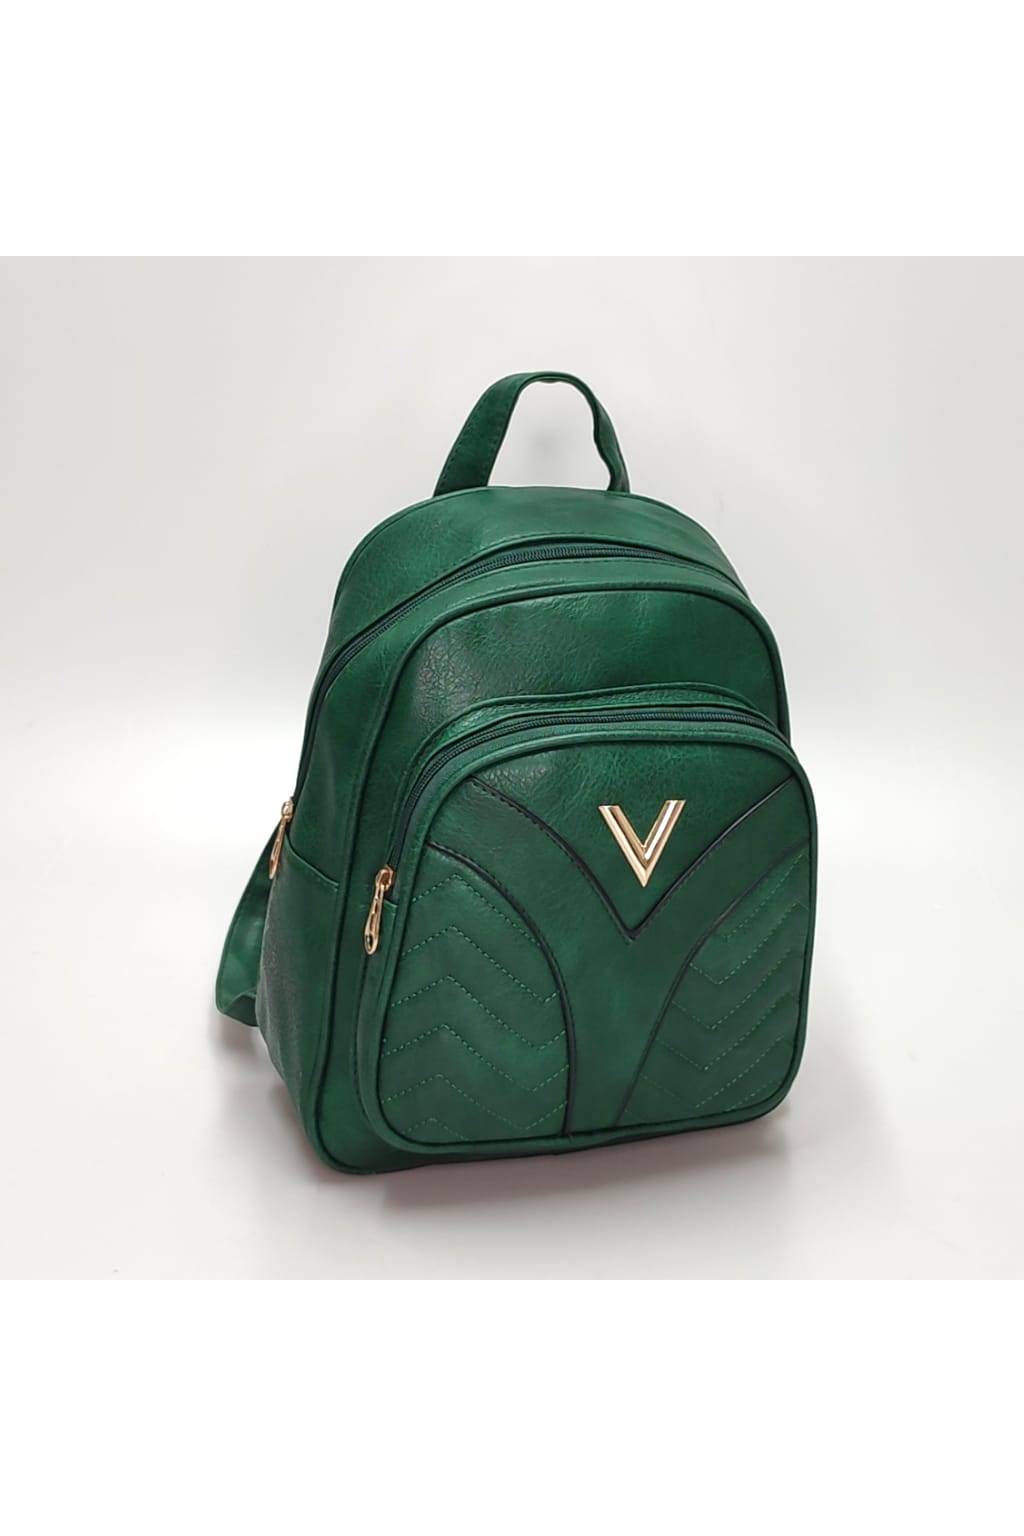 Dámsky ruksak 8151 zelený www.kabelky vypredaj (18)